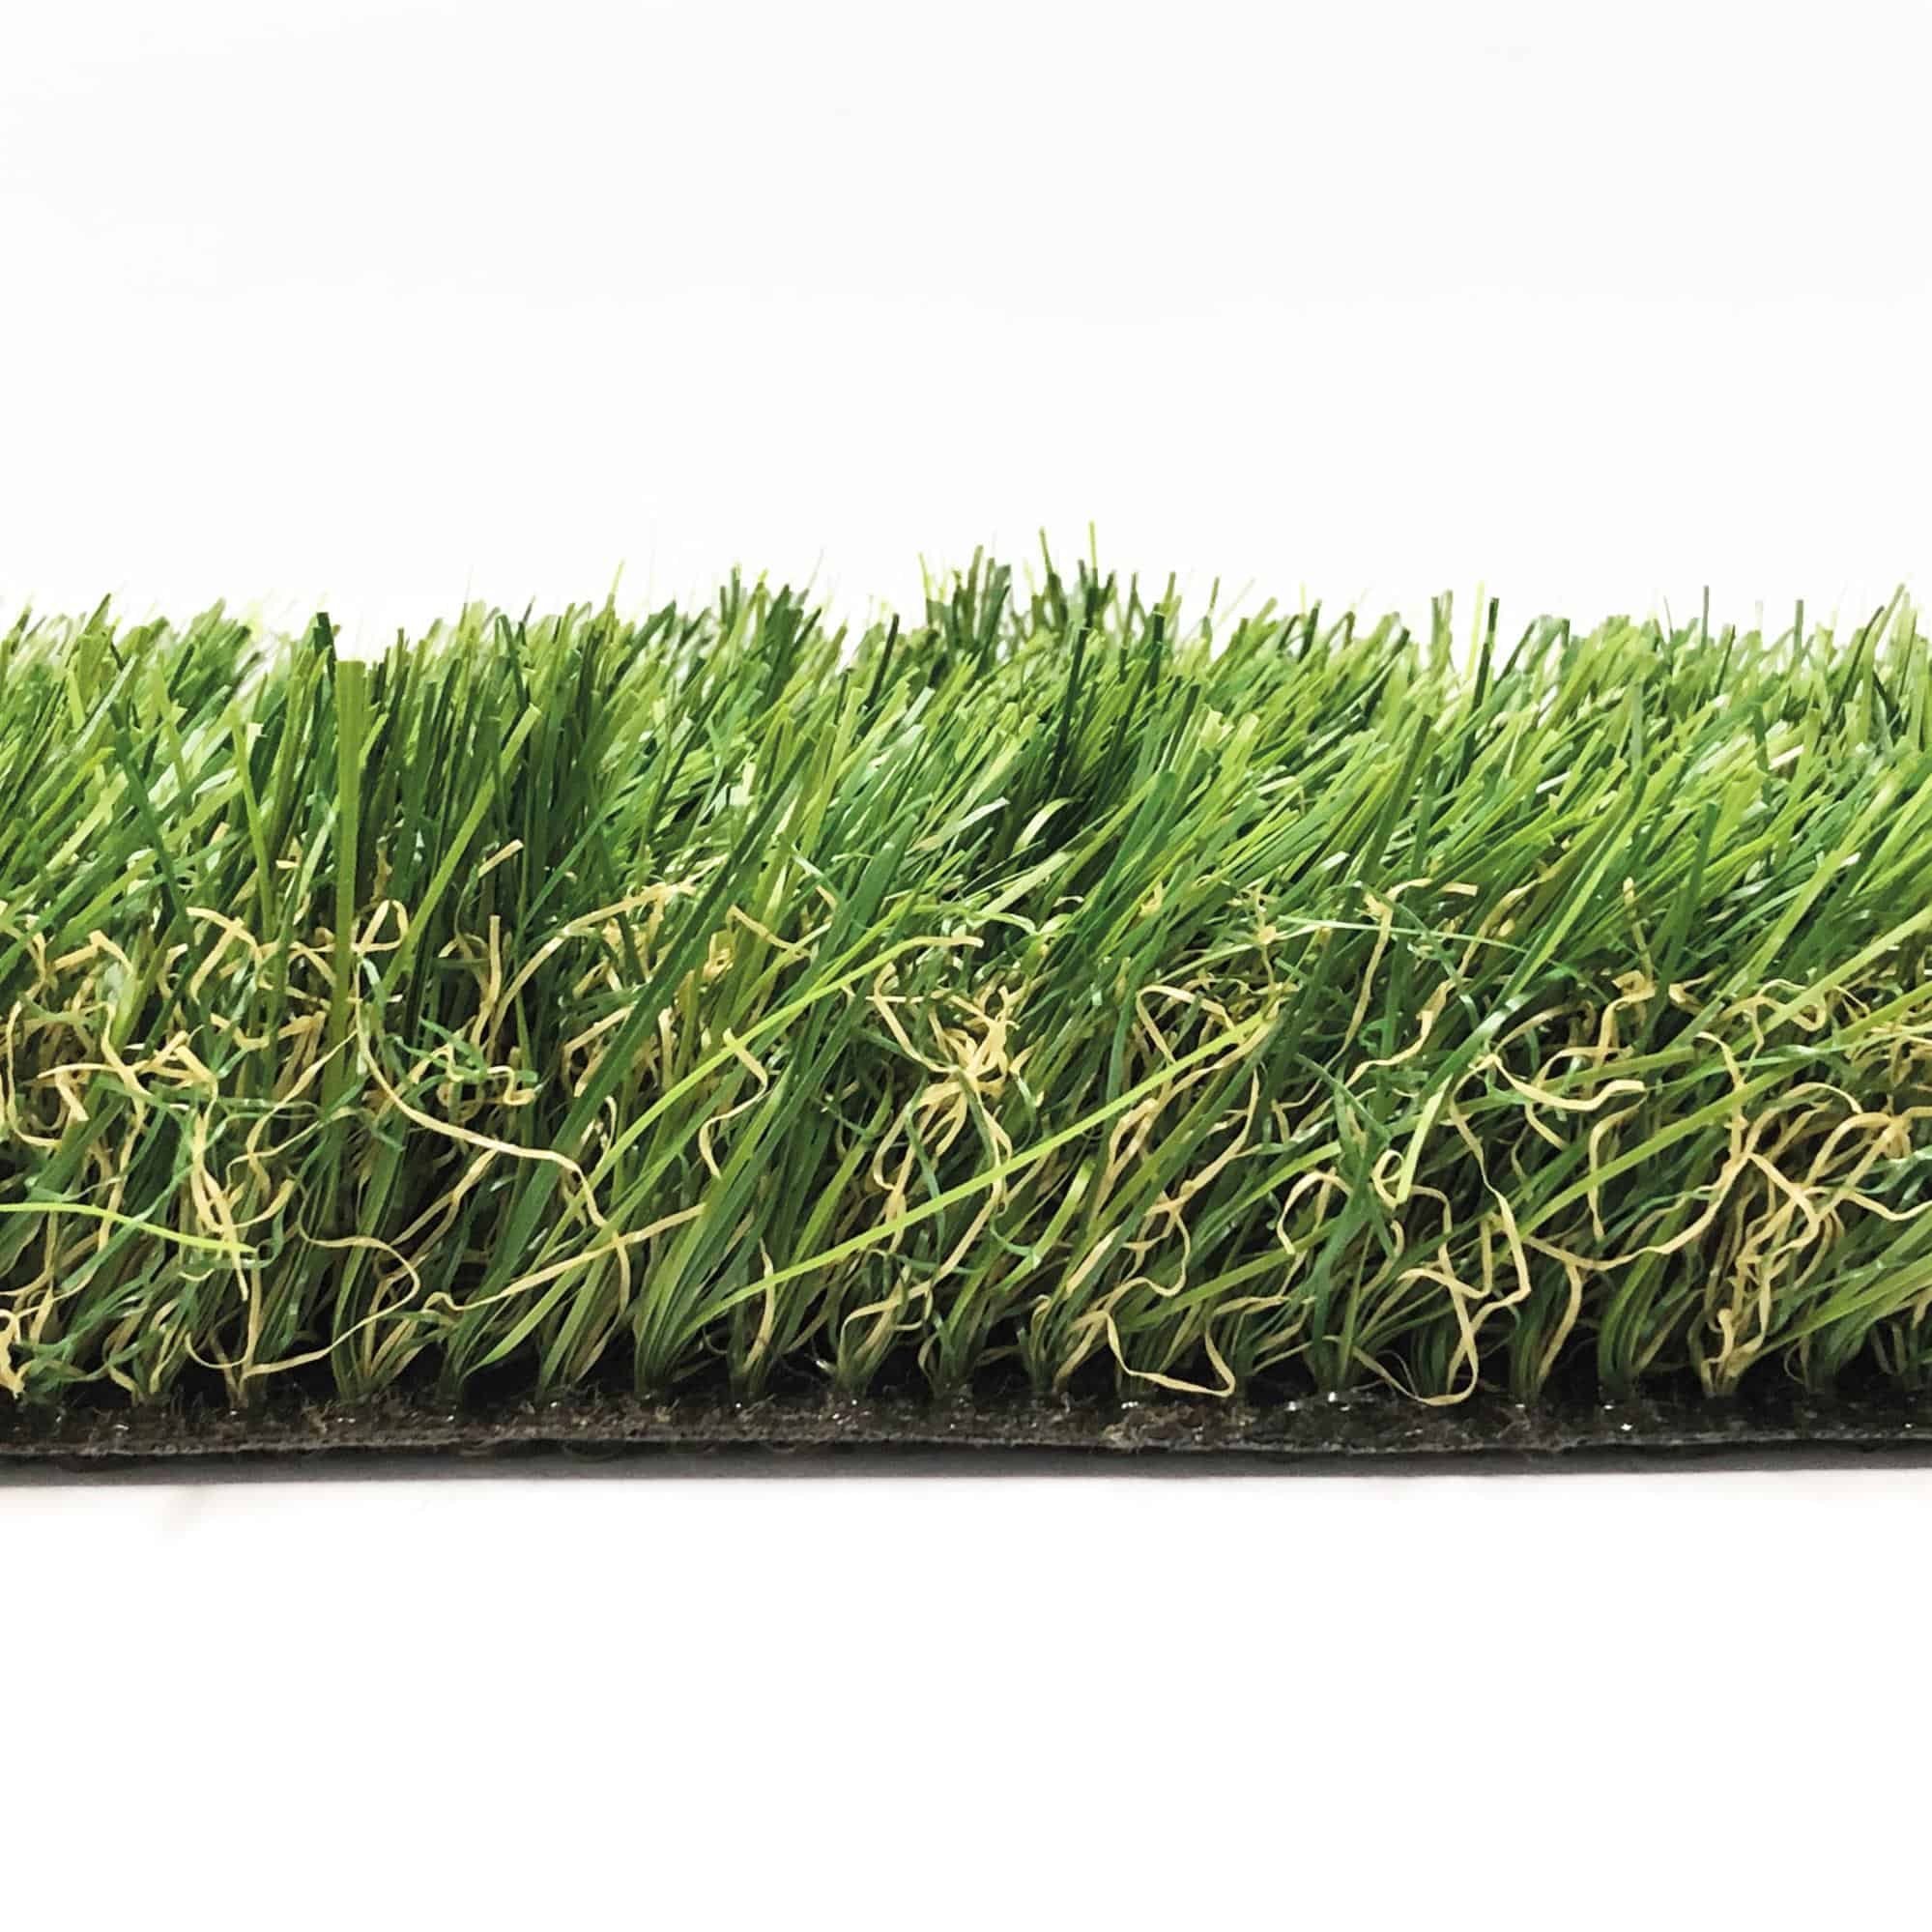 CORE Lawn Natural Artificial Grass 4m Wide Roll 8 m